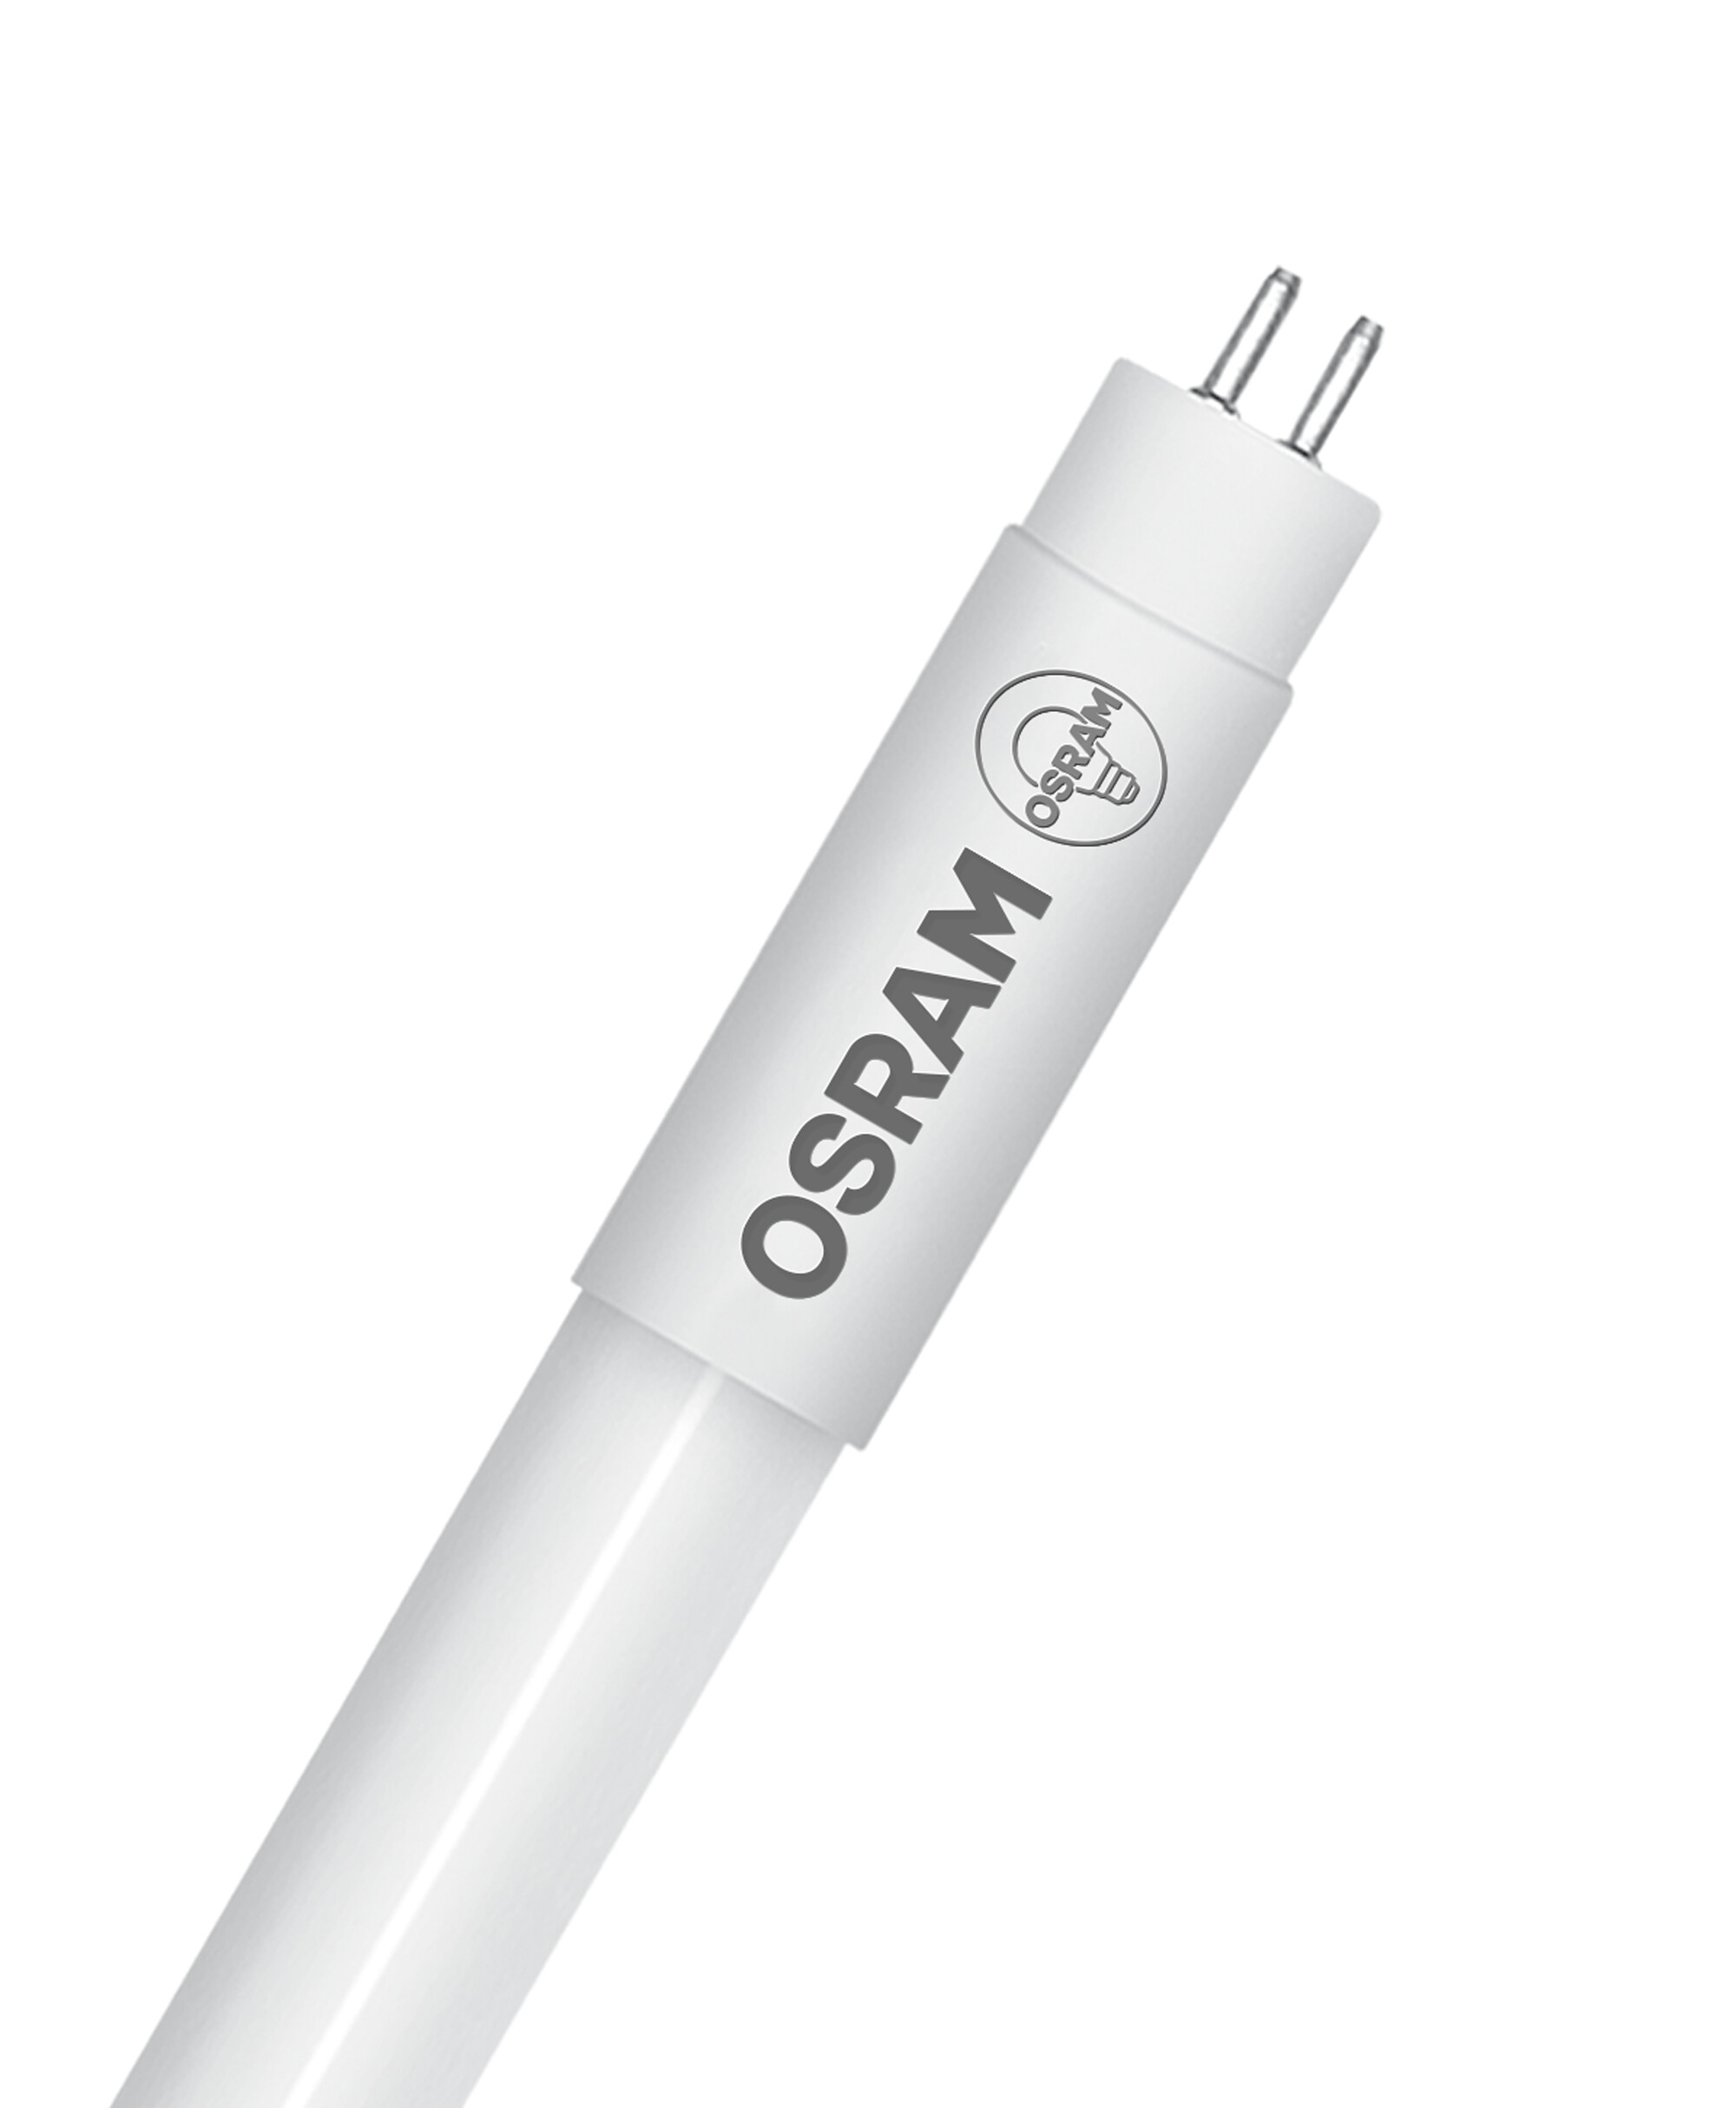 Osram Substitube LED T5 HF EVG HO80 1449mm 37 Watt 865 Tageslicht 